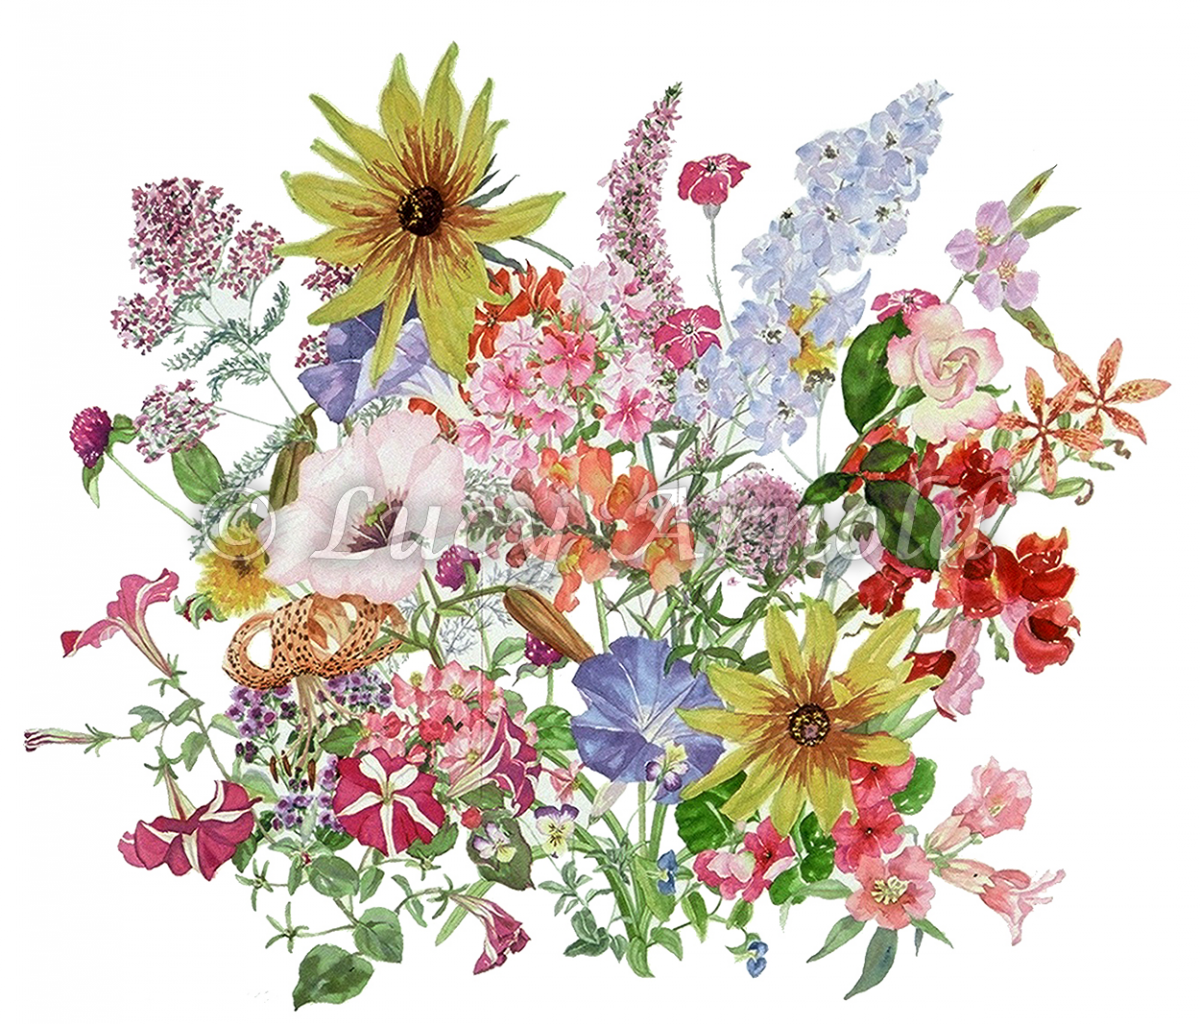 Summer garden flowers by Lucy Arnold